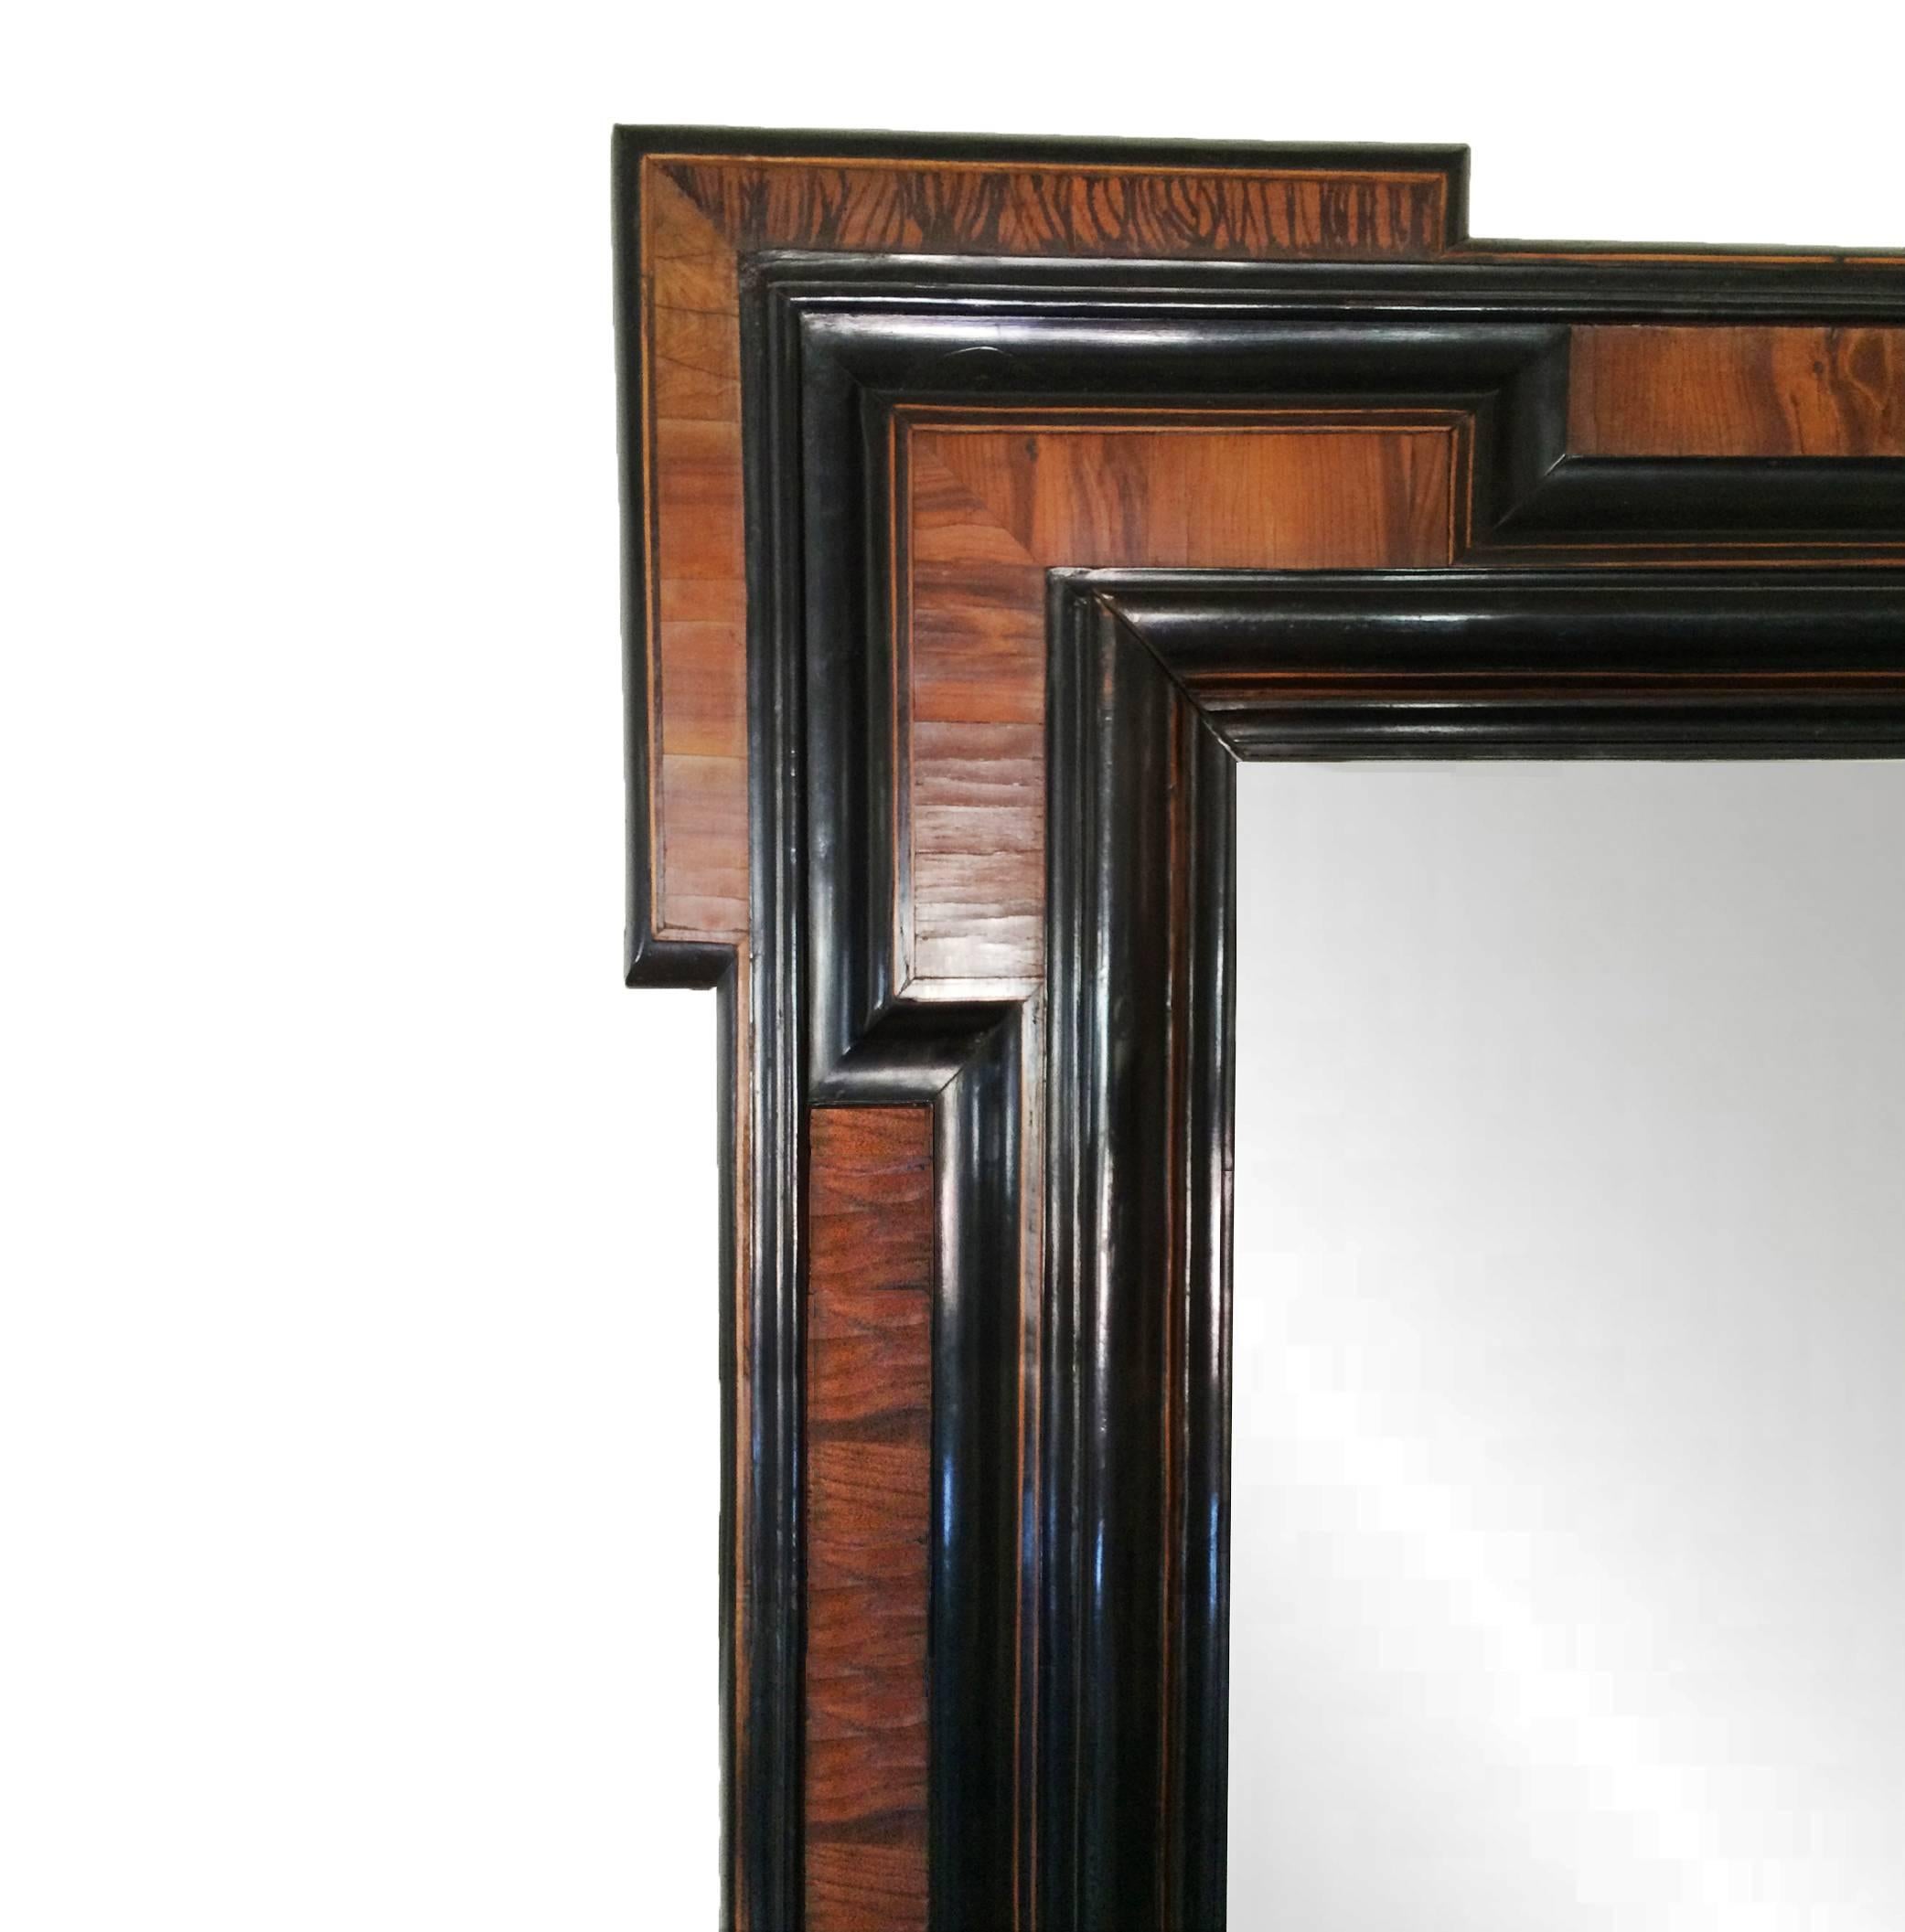 Italian Piemontese Baroque mirror; having stepped corners and multiple layers of walnut veneer within ebonized moldings; 18th Century.